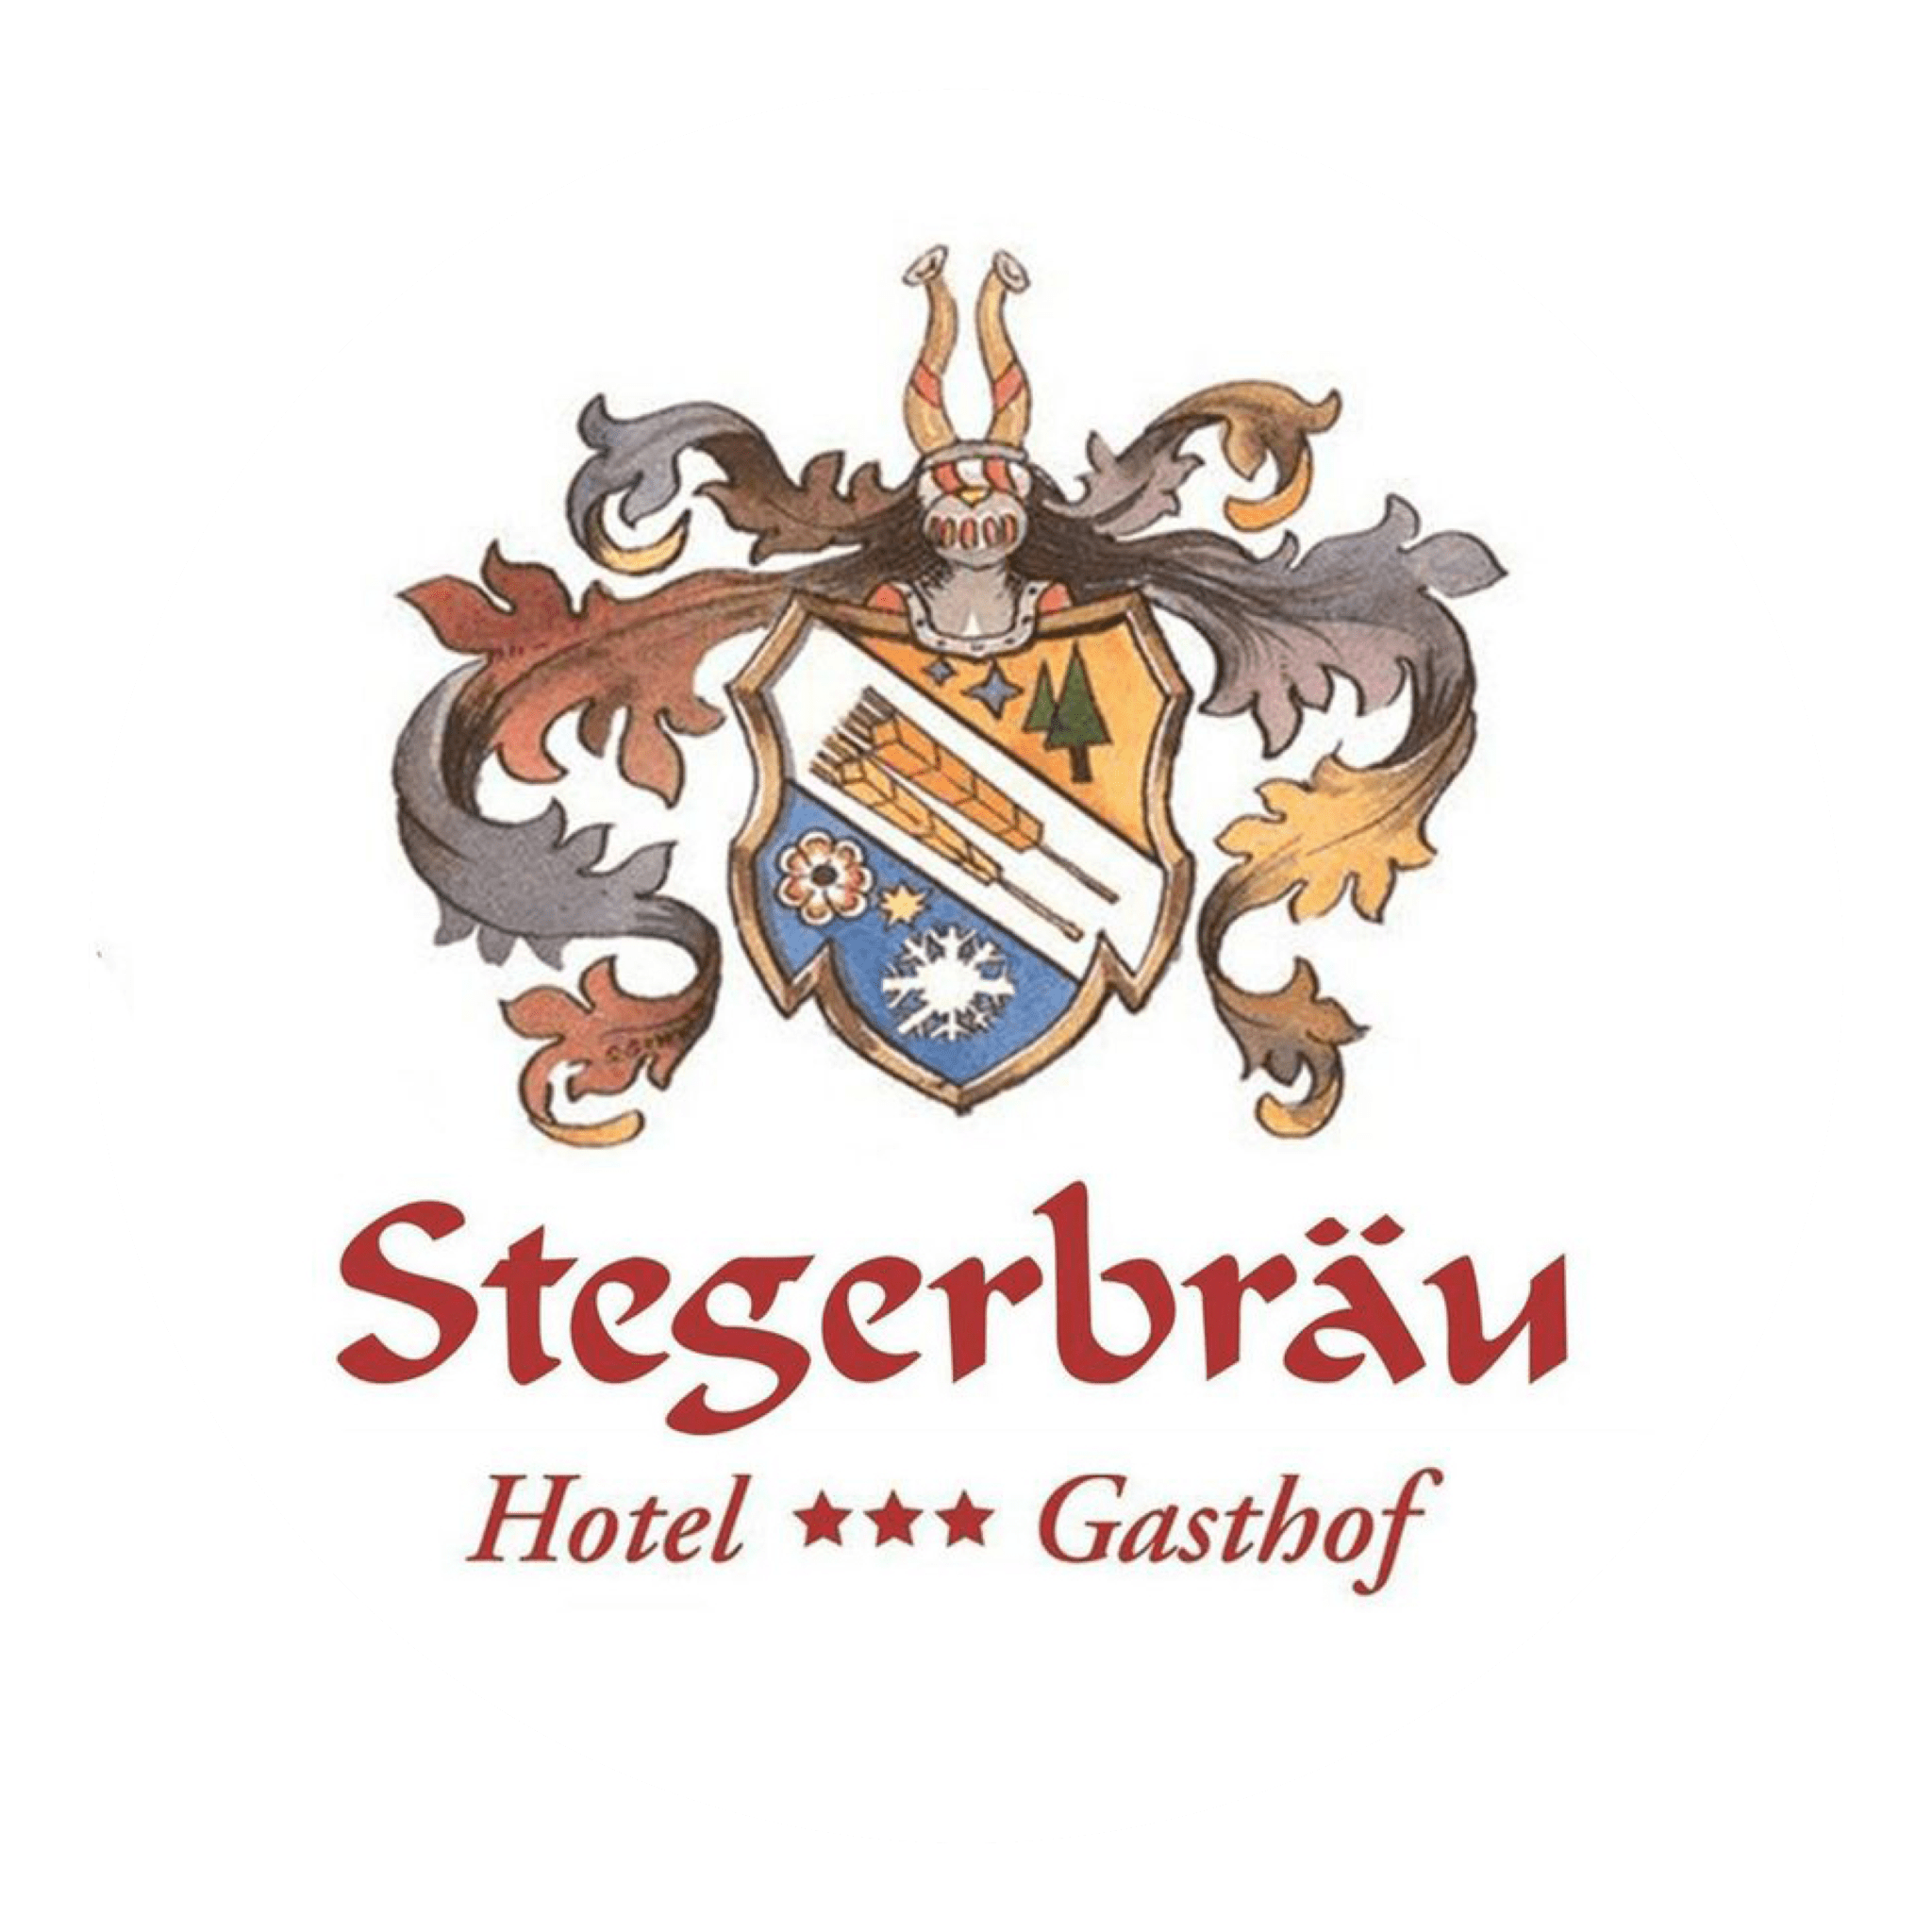 Hotel Restaurant Stegerbräu